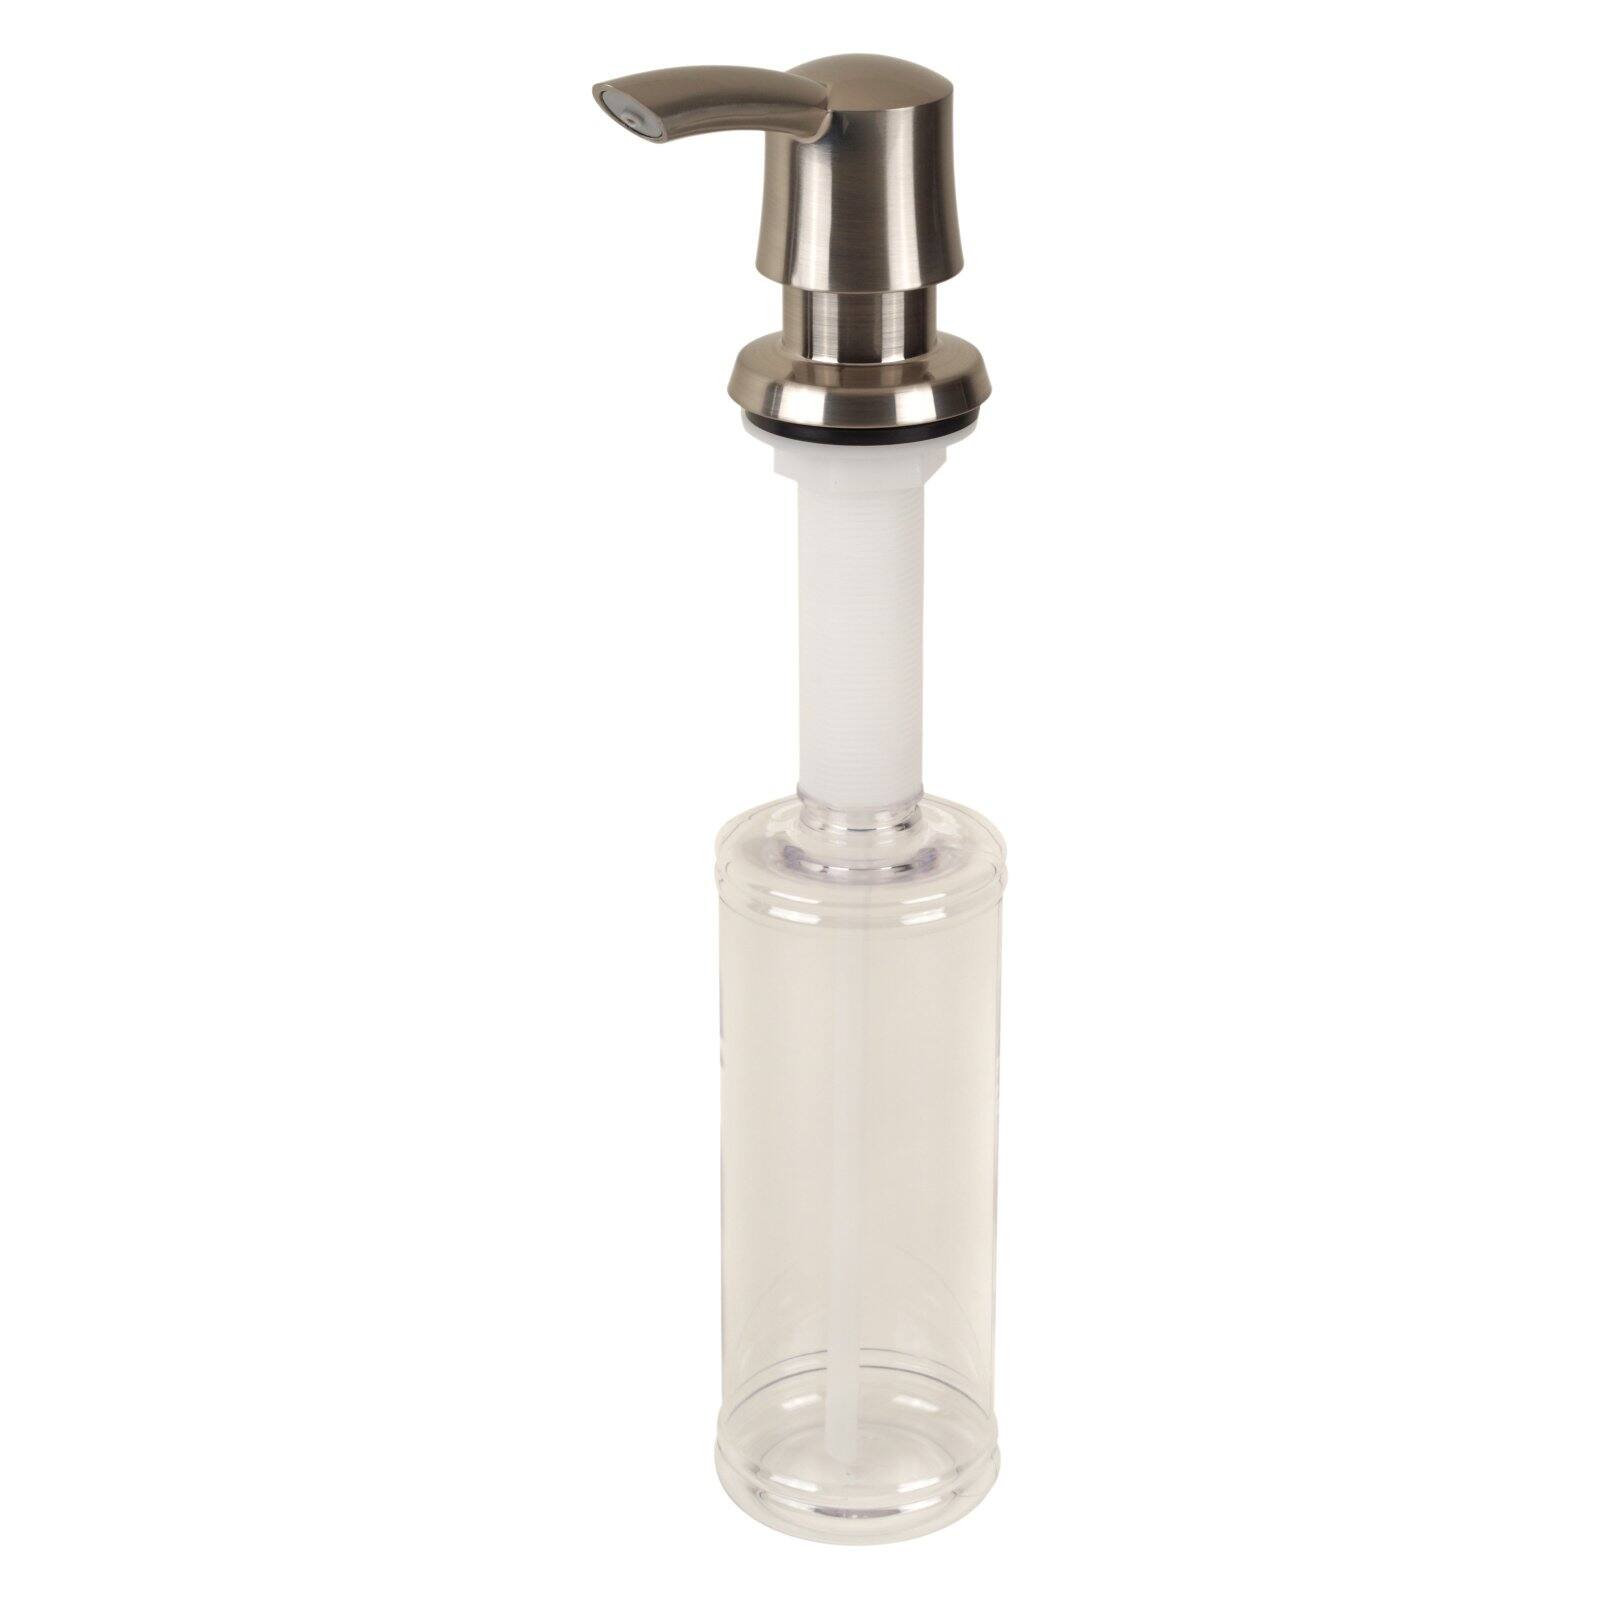 Ultra Faucets Oil Rubbed Bronze Oil Rubbed Bronze Zinc Lotion/Soap Dispenser - image 2 of 2